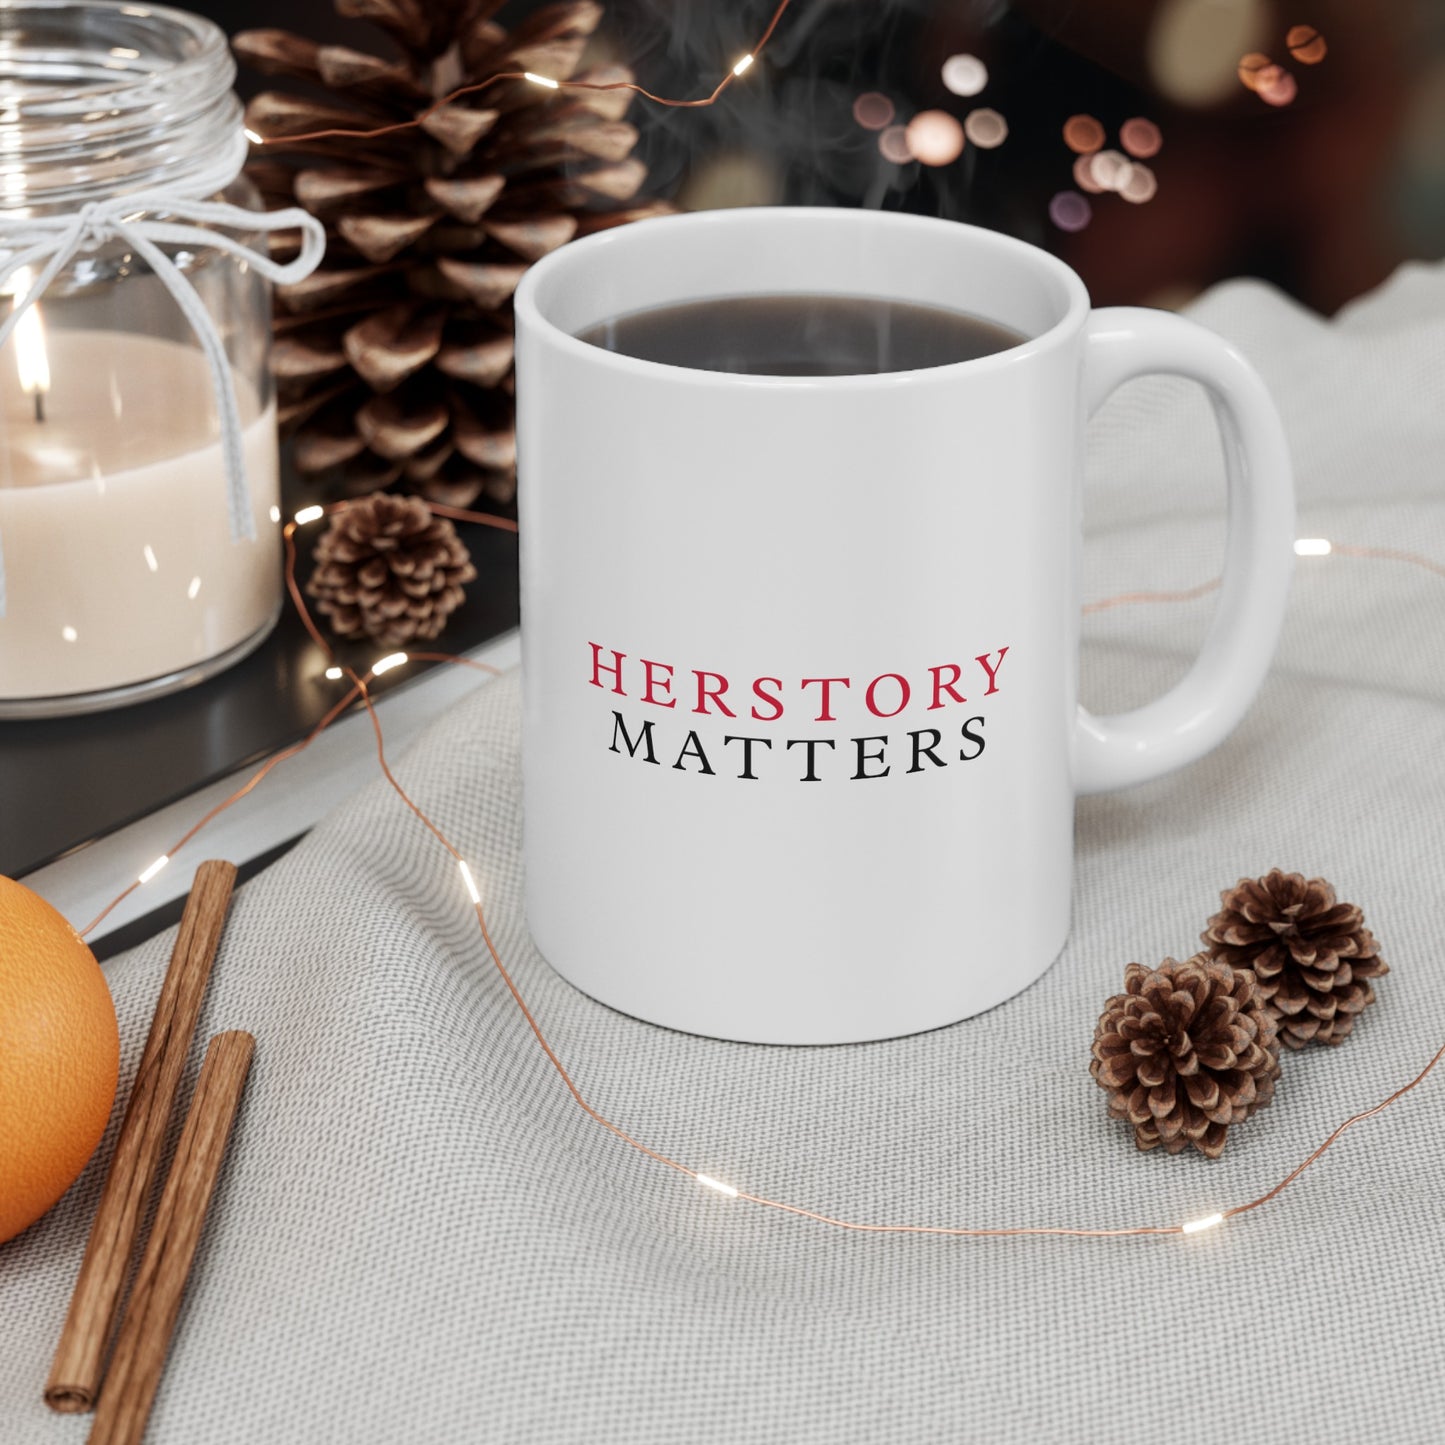 Herstory Matters White Ceramic Mug (11oz, 15oz)